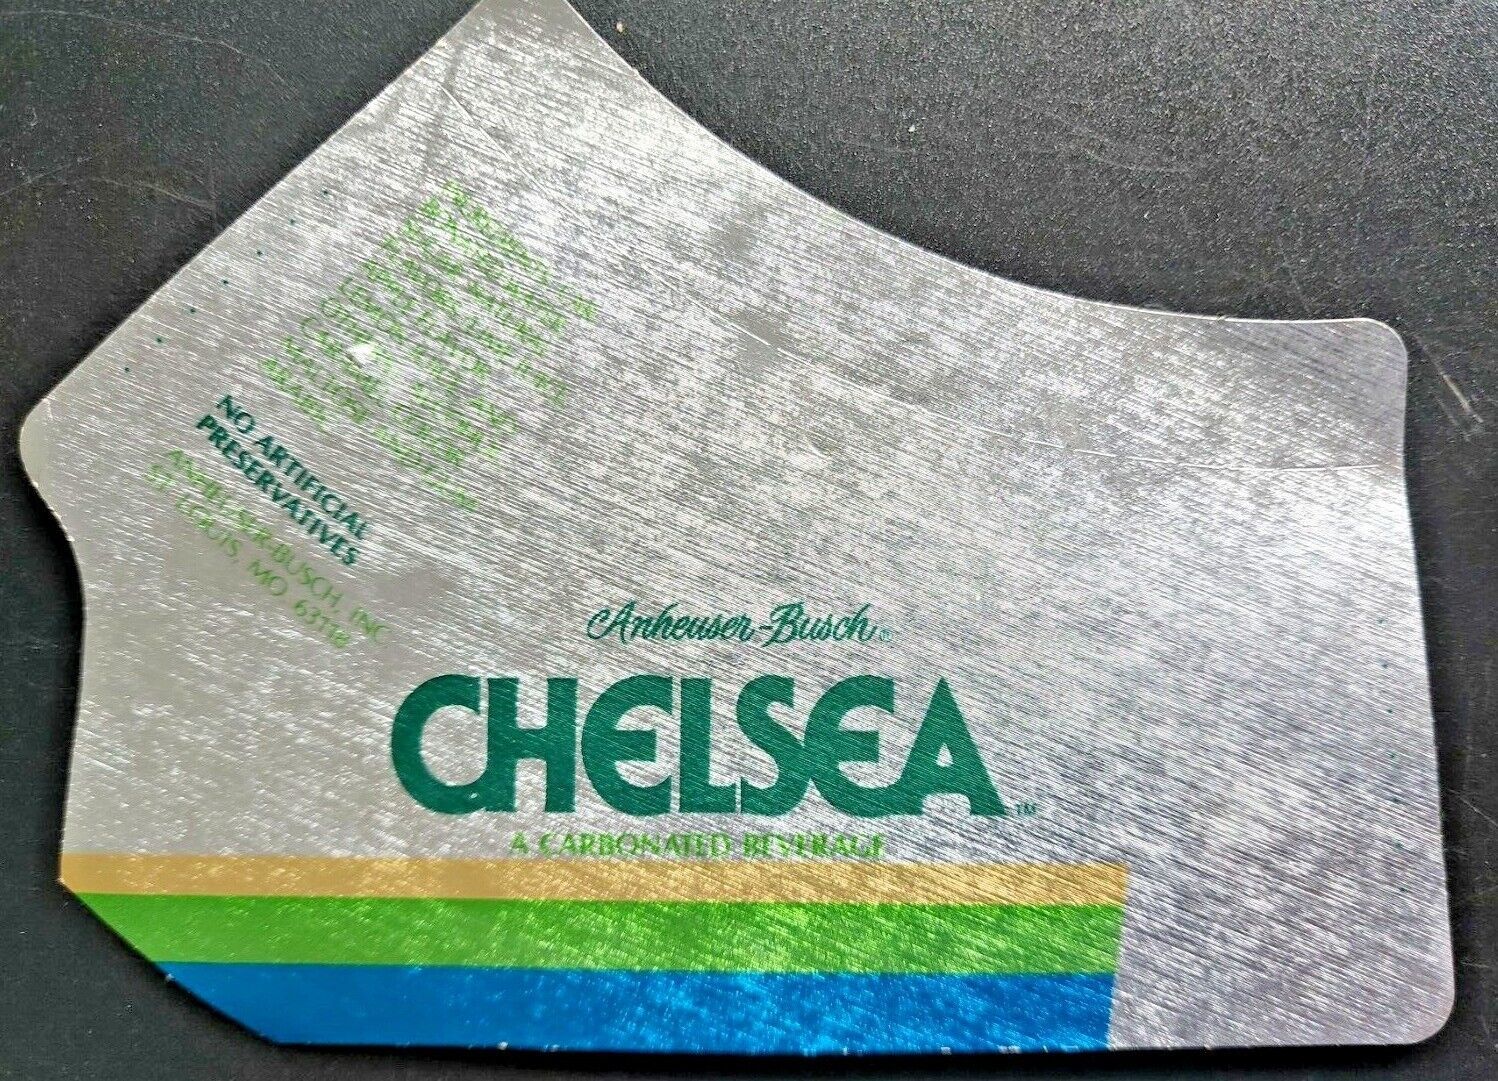 Chelsea Bottle Label Unused Anheuser Busch A Carbonated Beverage B1 - $2.99